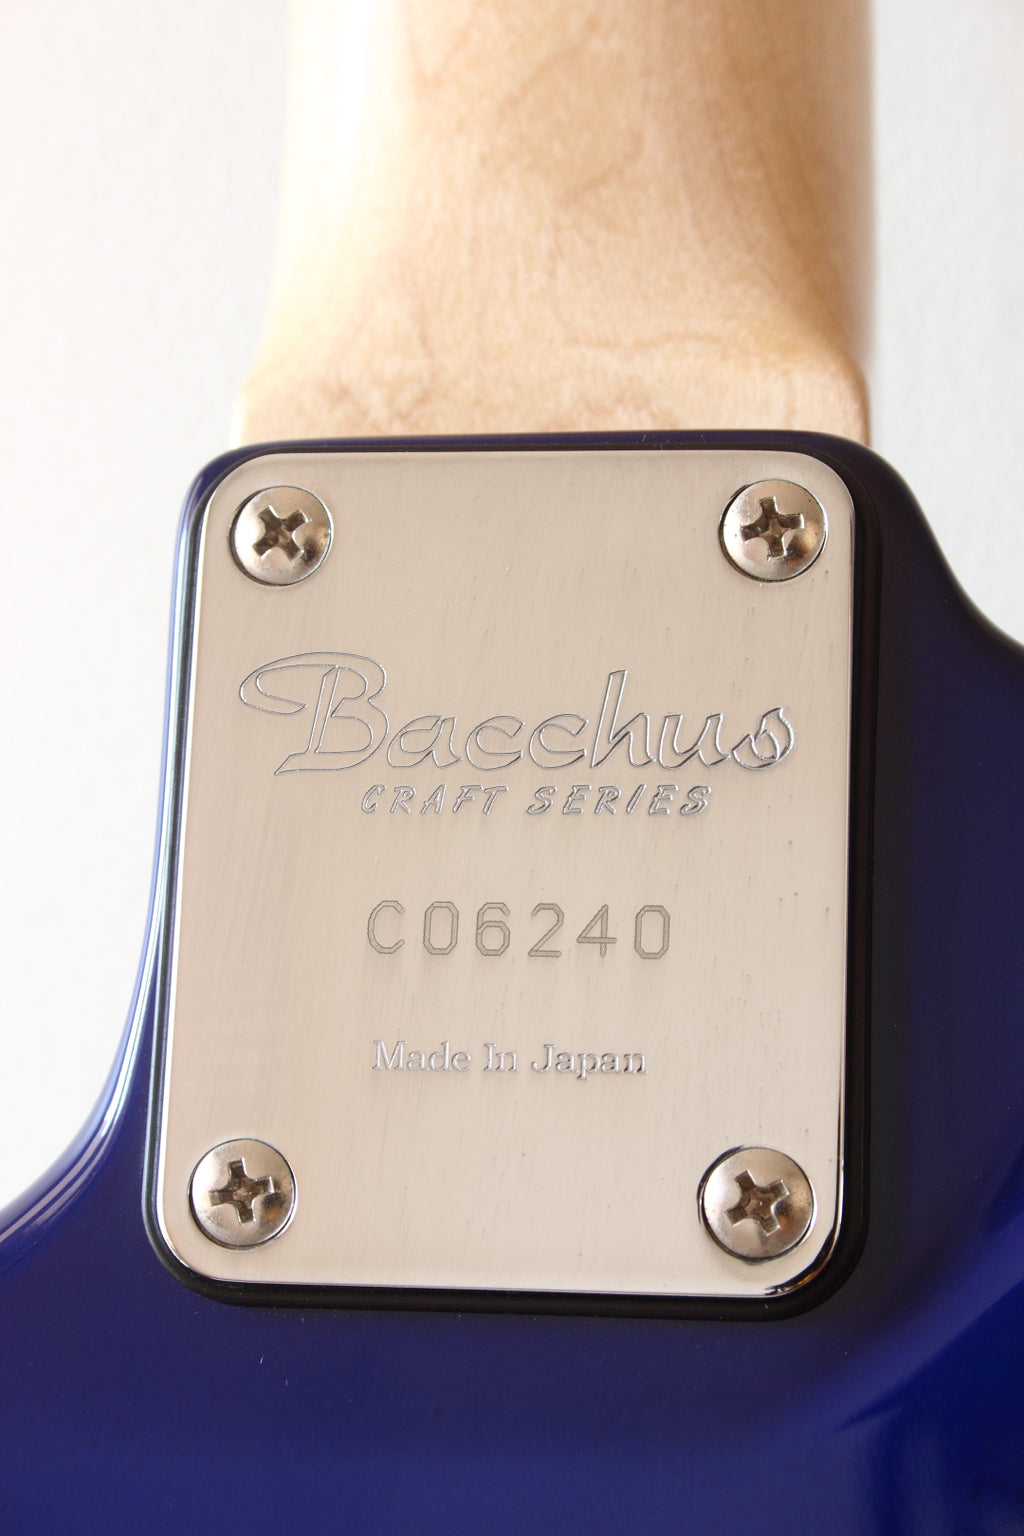 Bacchus Craft Series Windy JM-style Deep Blue 2015